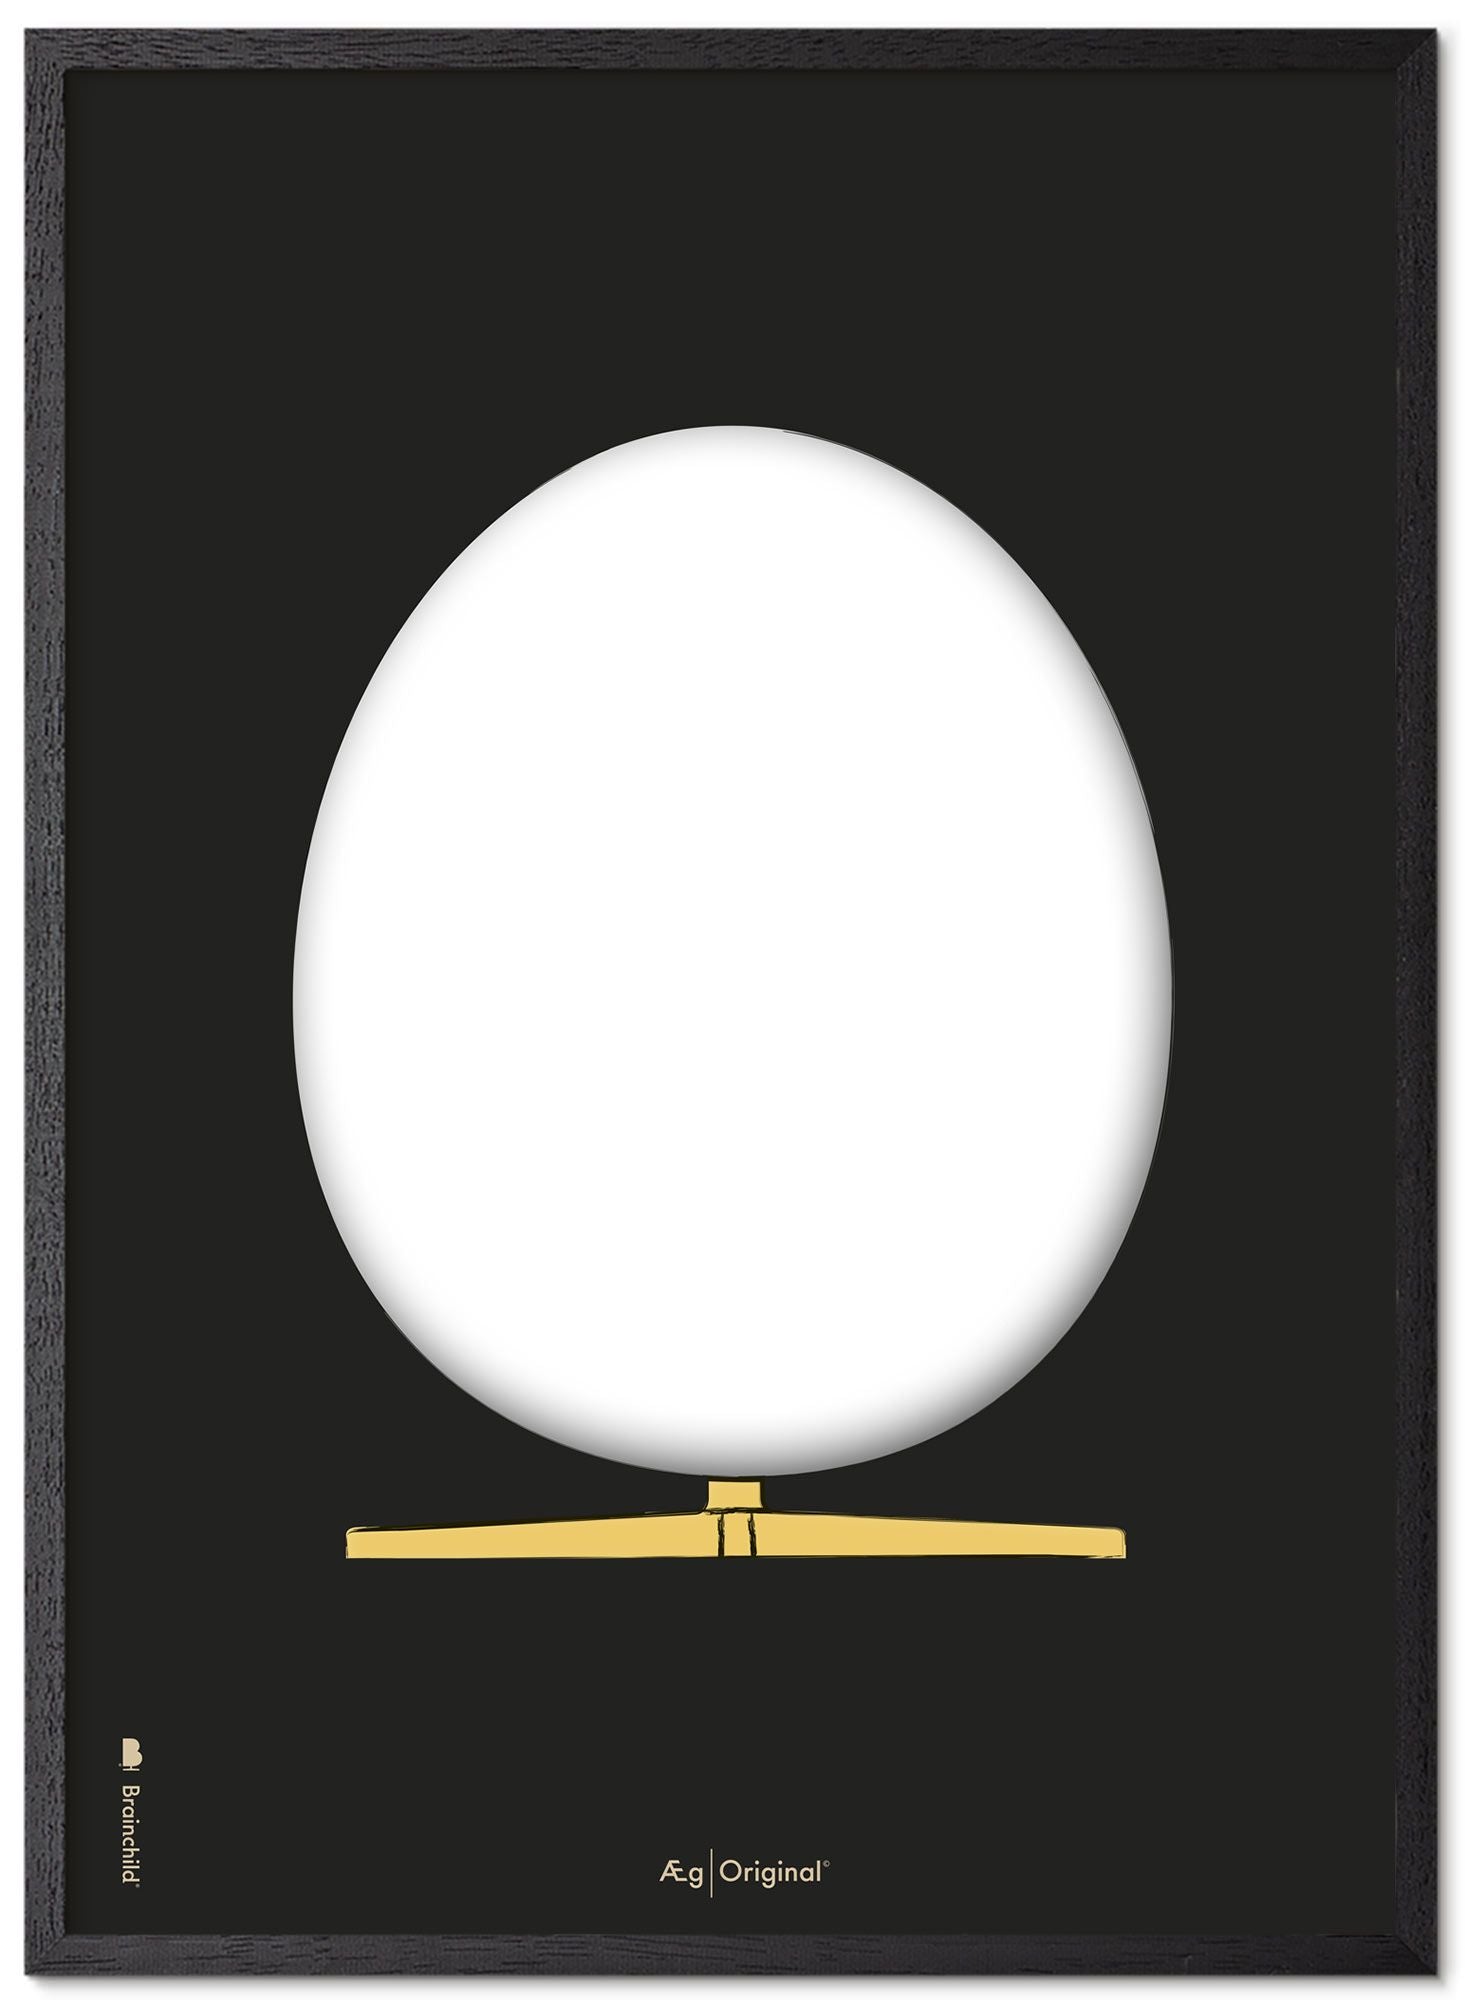 Brainchild The Egg Design Sketch Poster Frame Made Of Black Lacquered Wood 50x70 Cm, Black Background